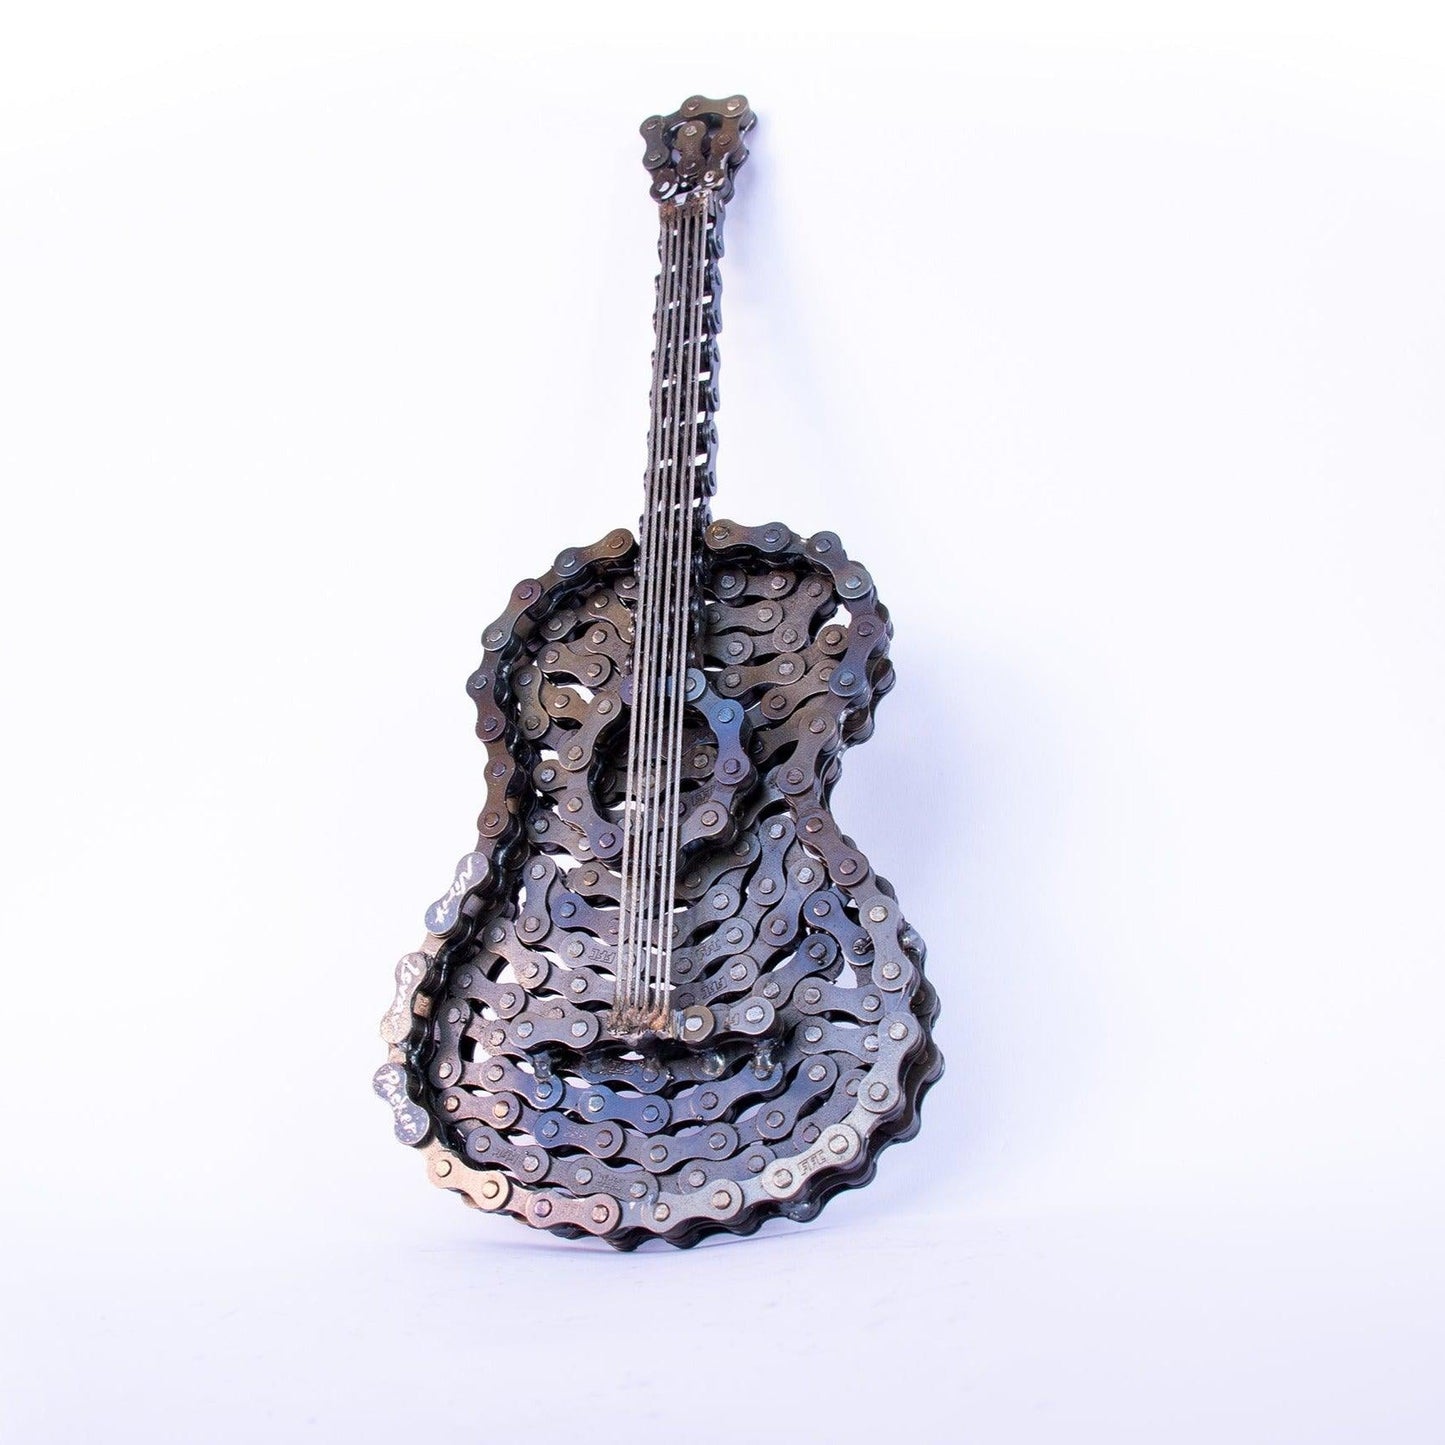 Guitar Sculpture | UNCHAINED by NIRIT LEVAV PACKER